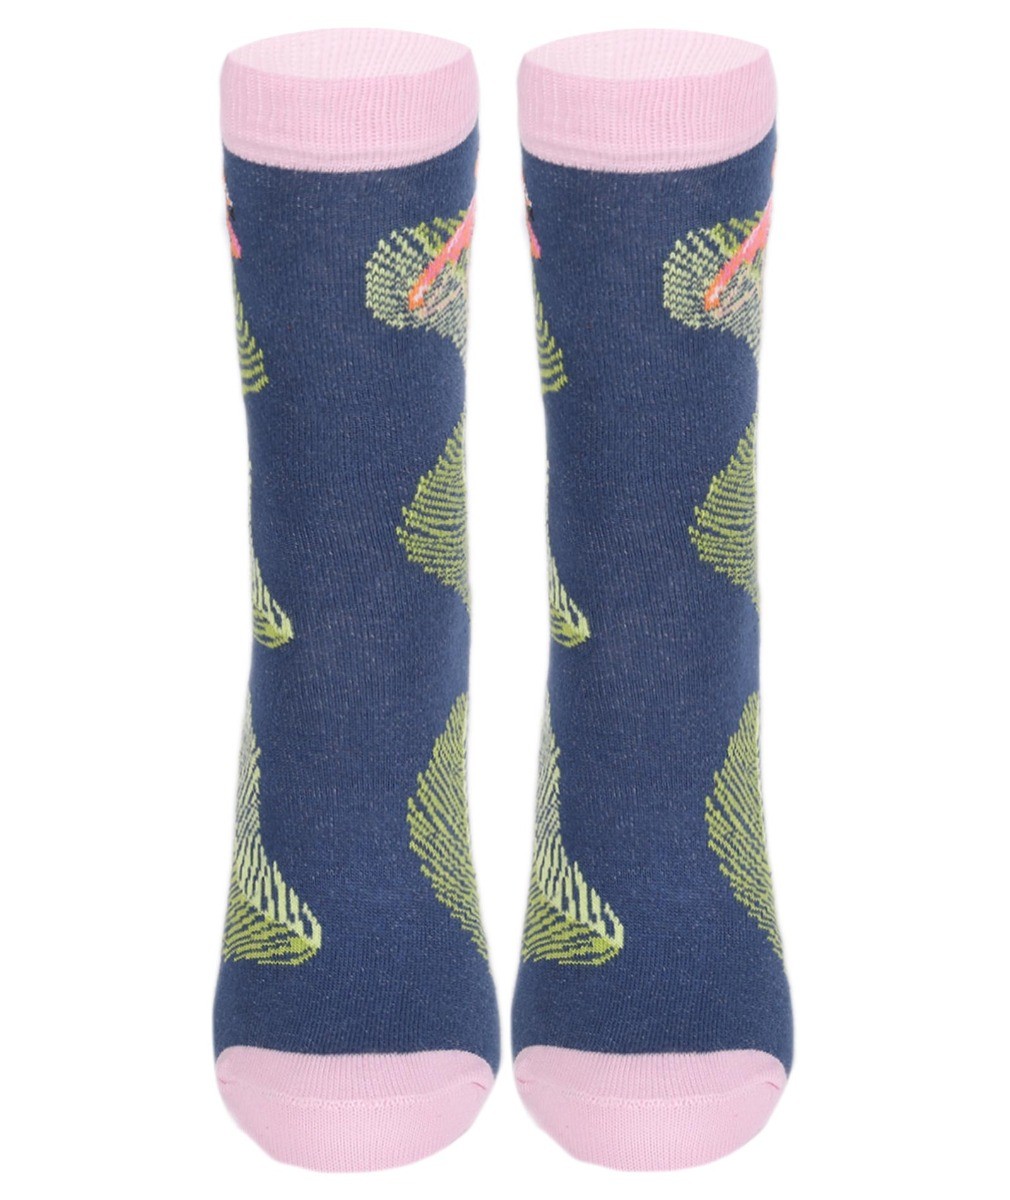 Unisex Kinder Flamingo Socken - Neuheit - Blau - grün - rosa